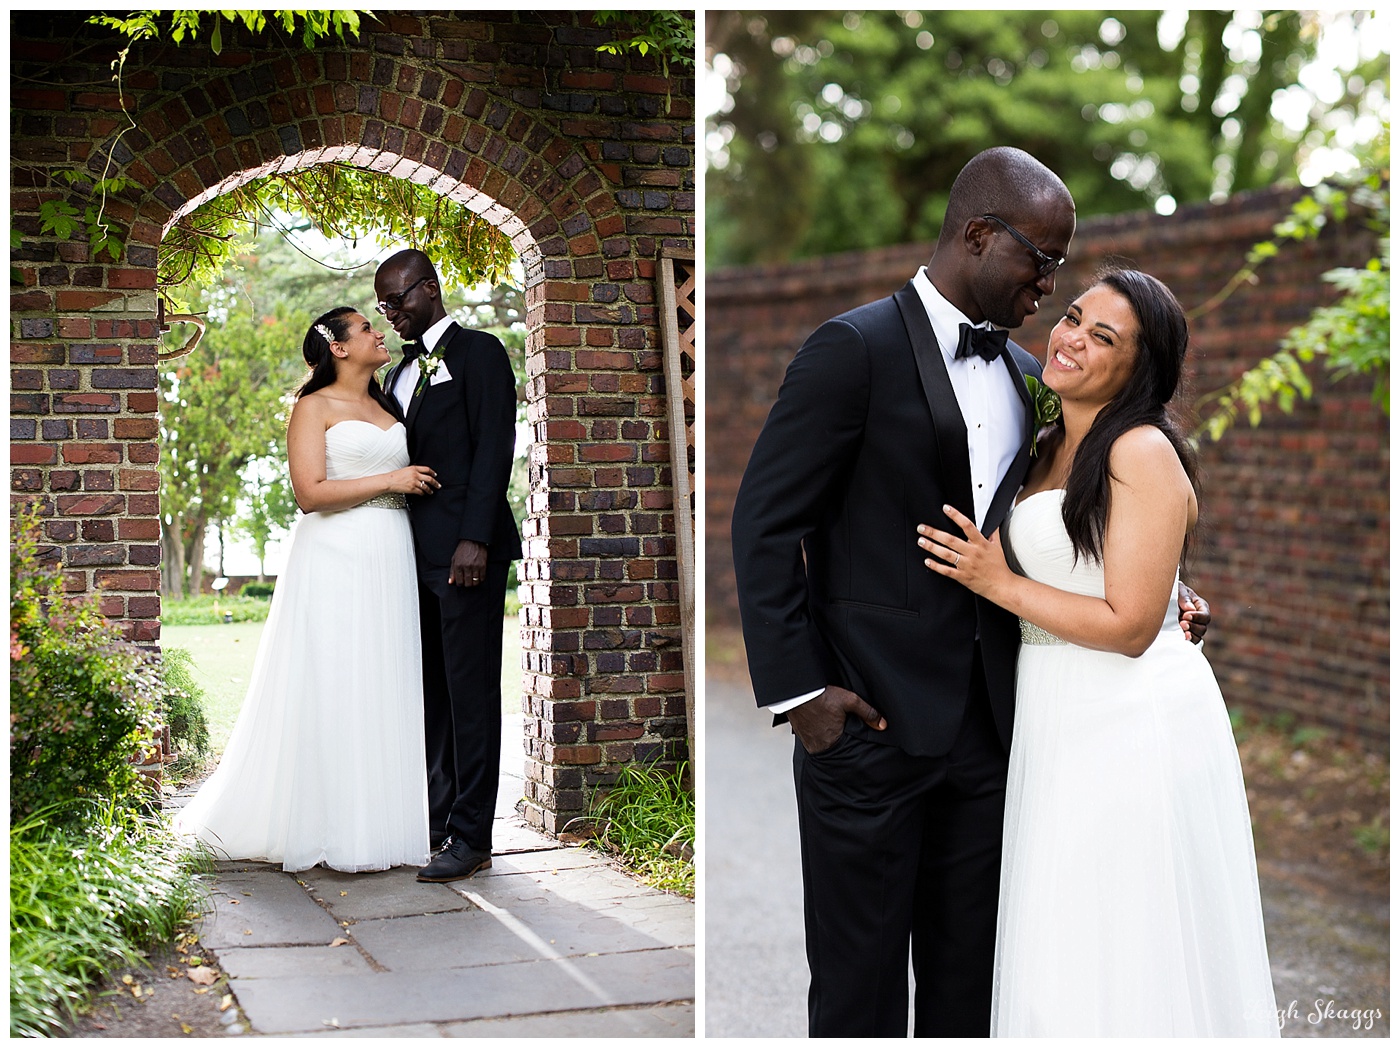 Alena & Luke are Married!!  A sneak peek from their Hermitage Museum & Garden Wedding!  